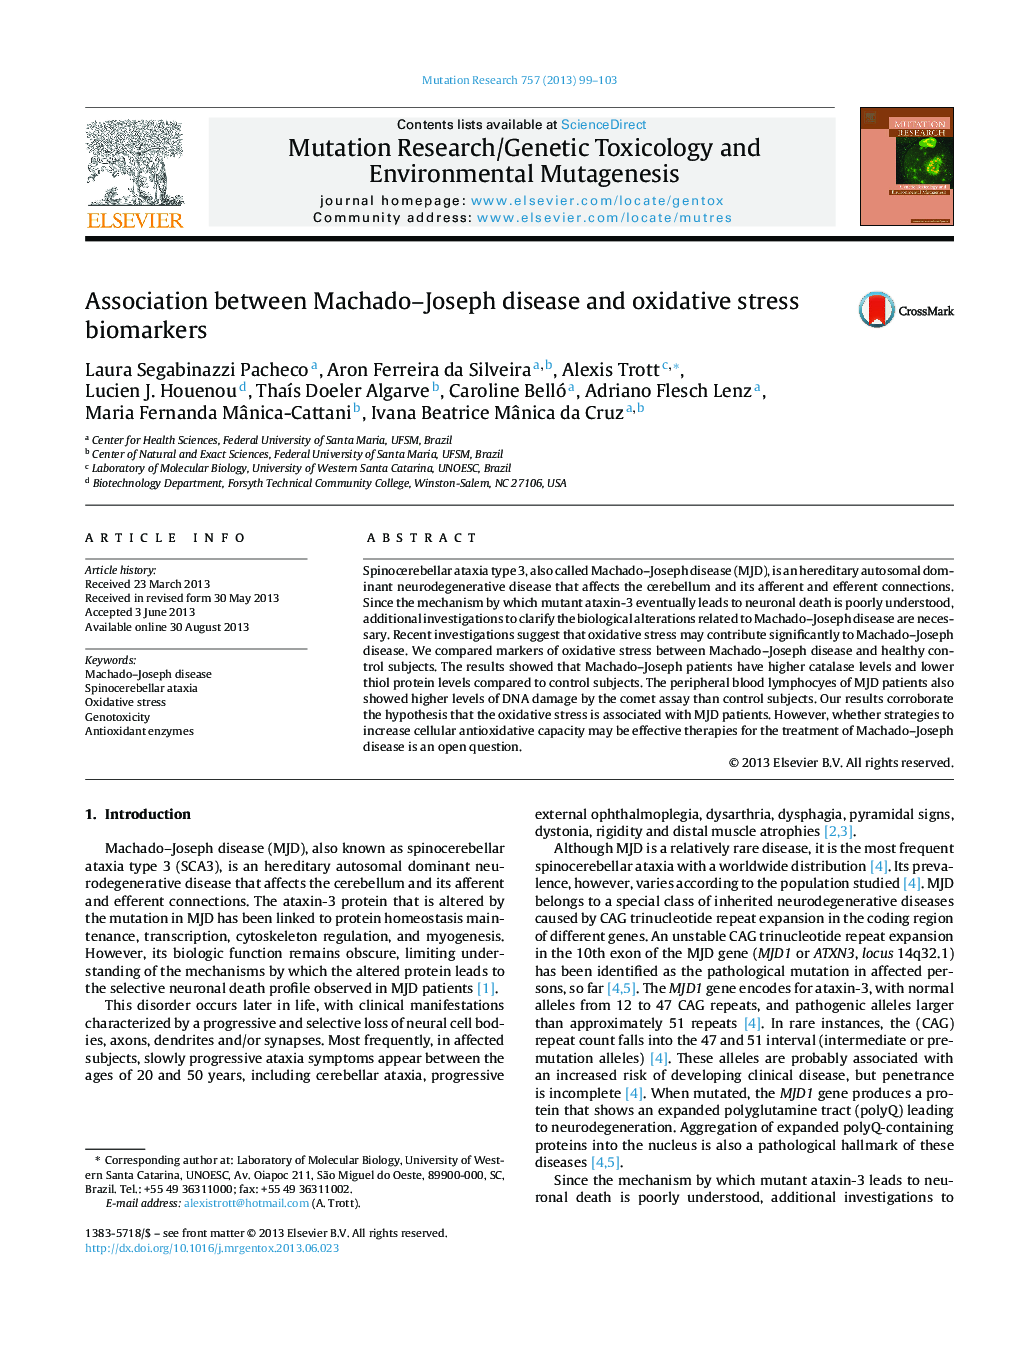 Association between Machado-Joseph disease and oxidative stress biomarkers